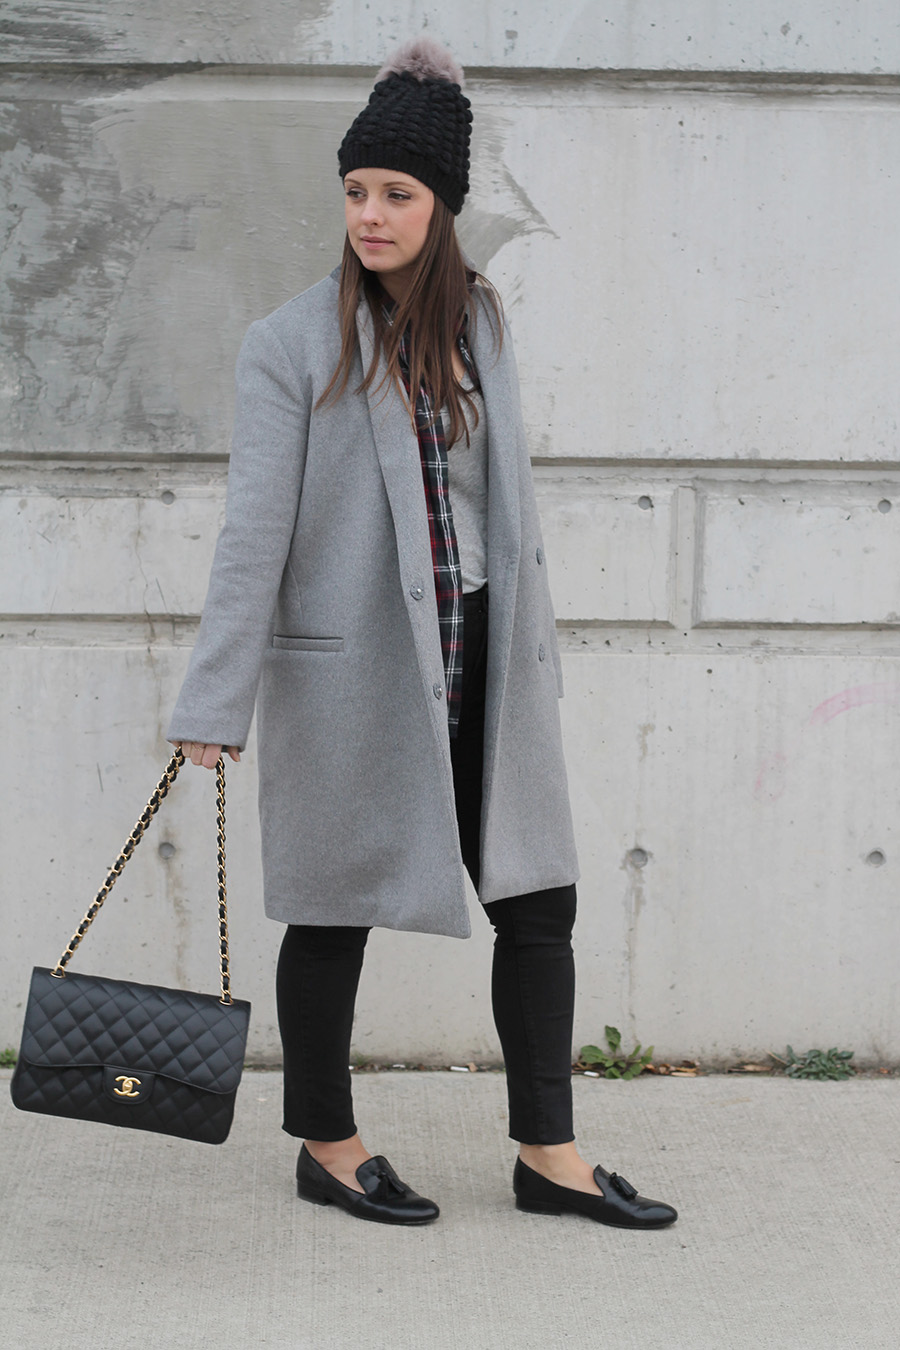 Fashion, Style, Outfit Ideas, Fall Style, Winter Fashion, Grey Wool Coat, Chanel handbag,